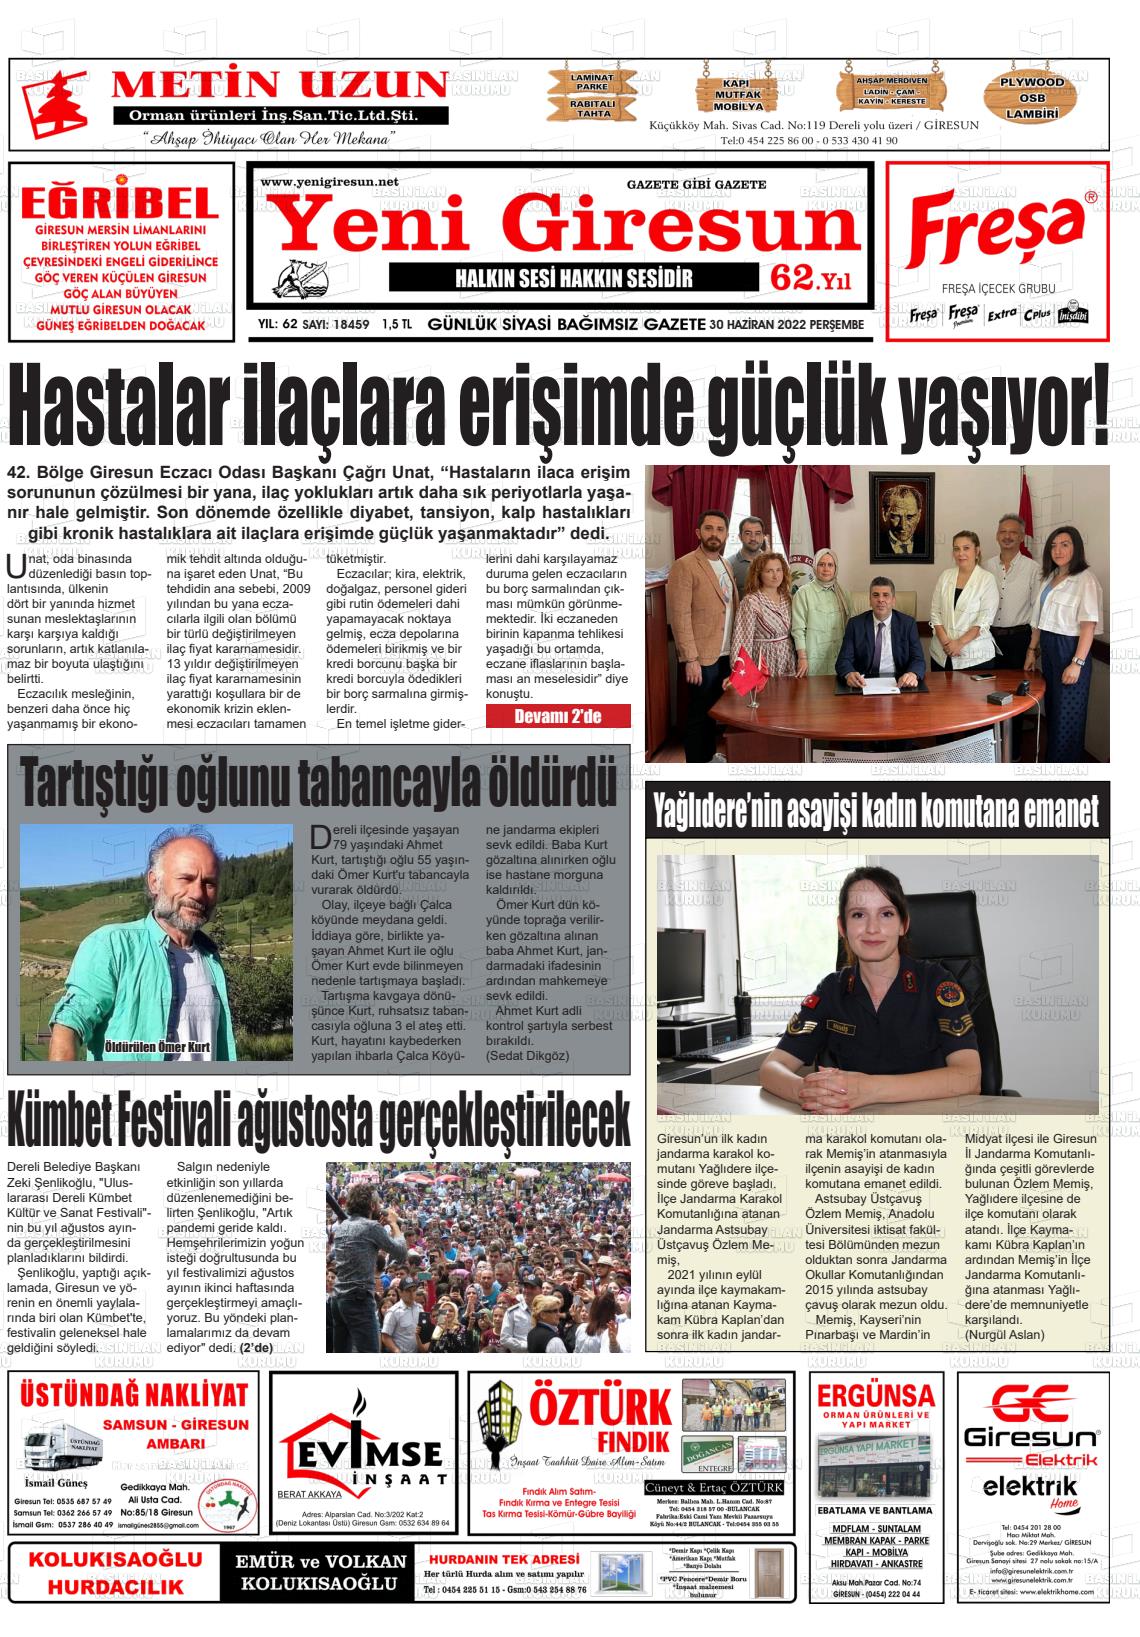 30 Haziran 2022 Yeni Giresun Gazete Manşeti